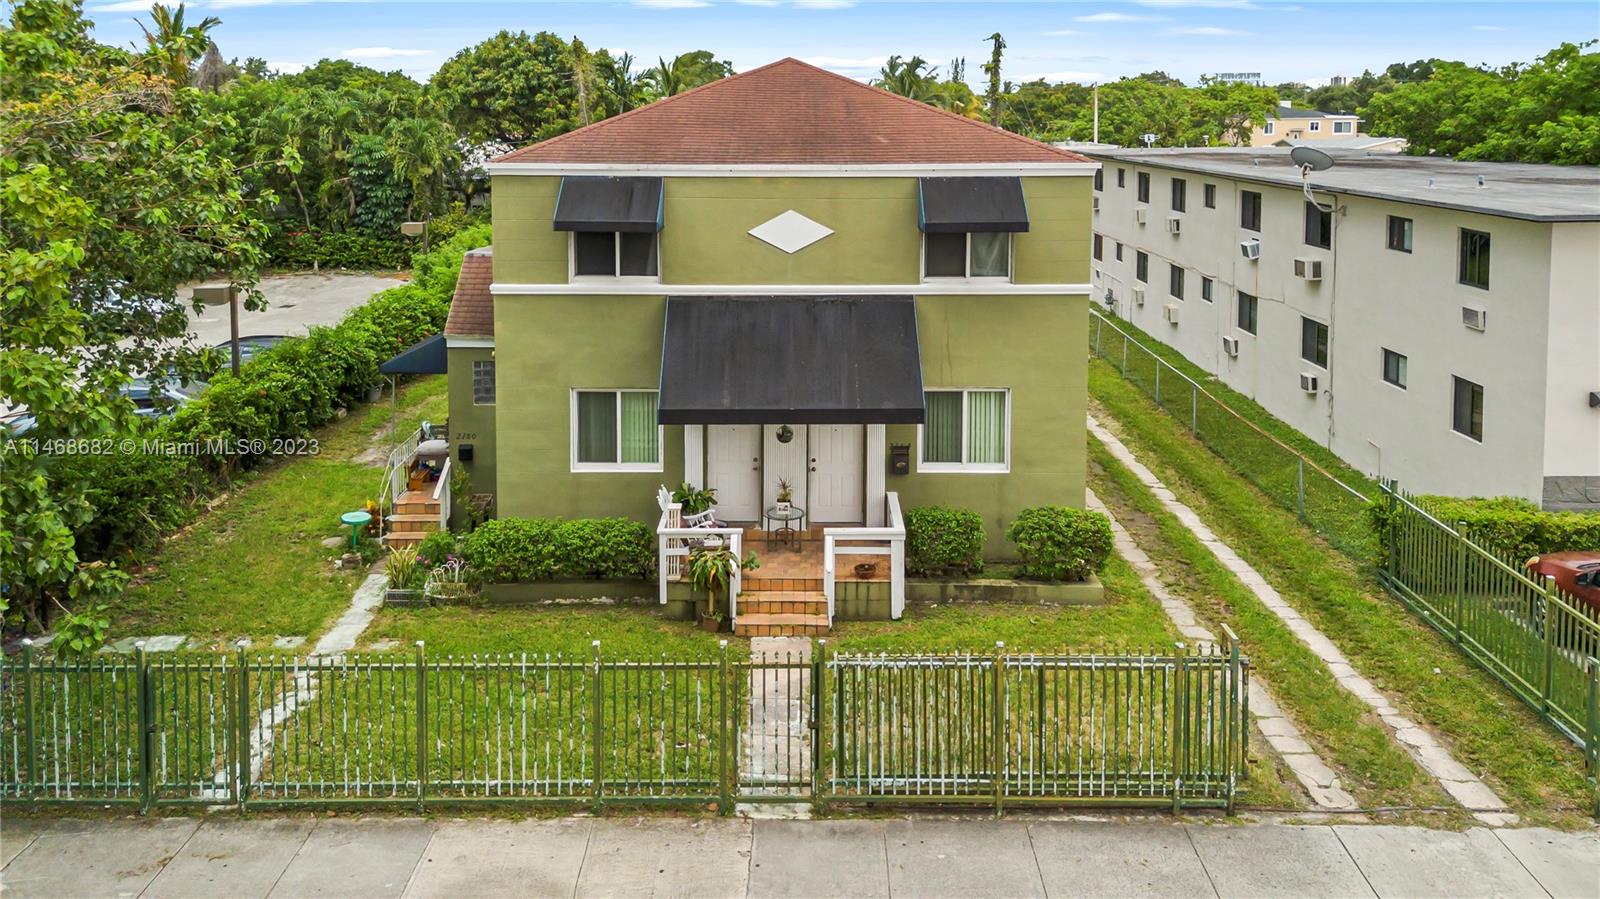 Rental Property at 2184 Sw 9th St St, Miami, Broward County, Florida -  - $1,200,000 MO.